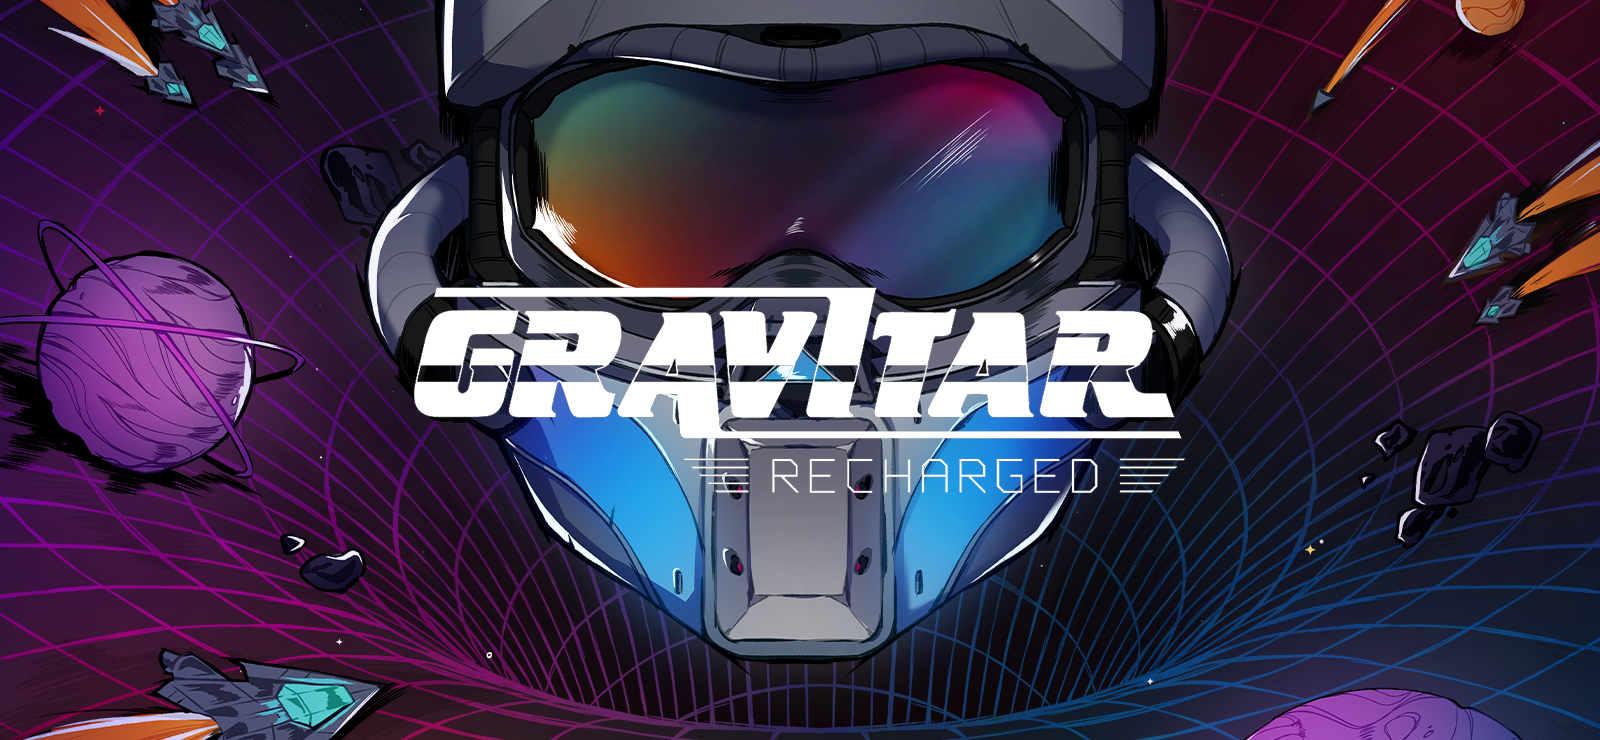 Gravitar: Recharged